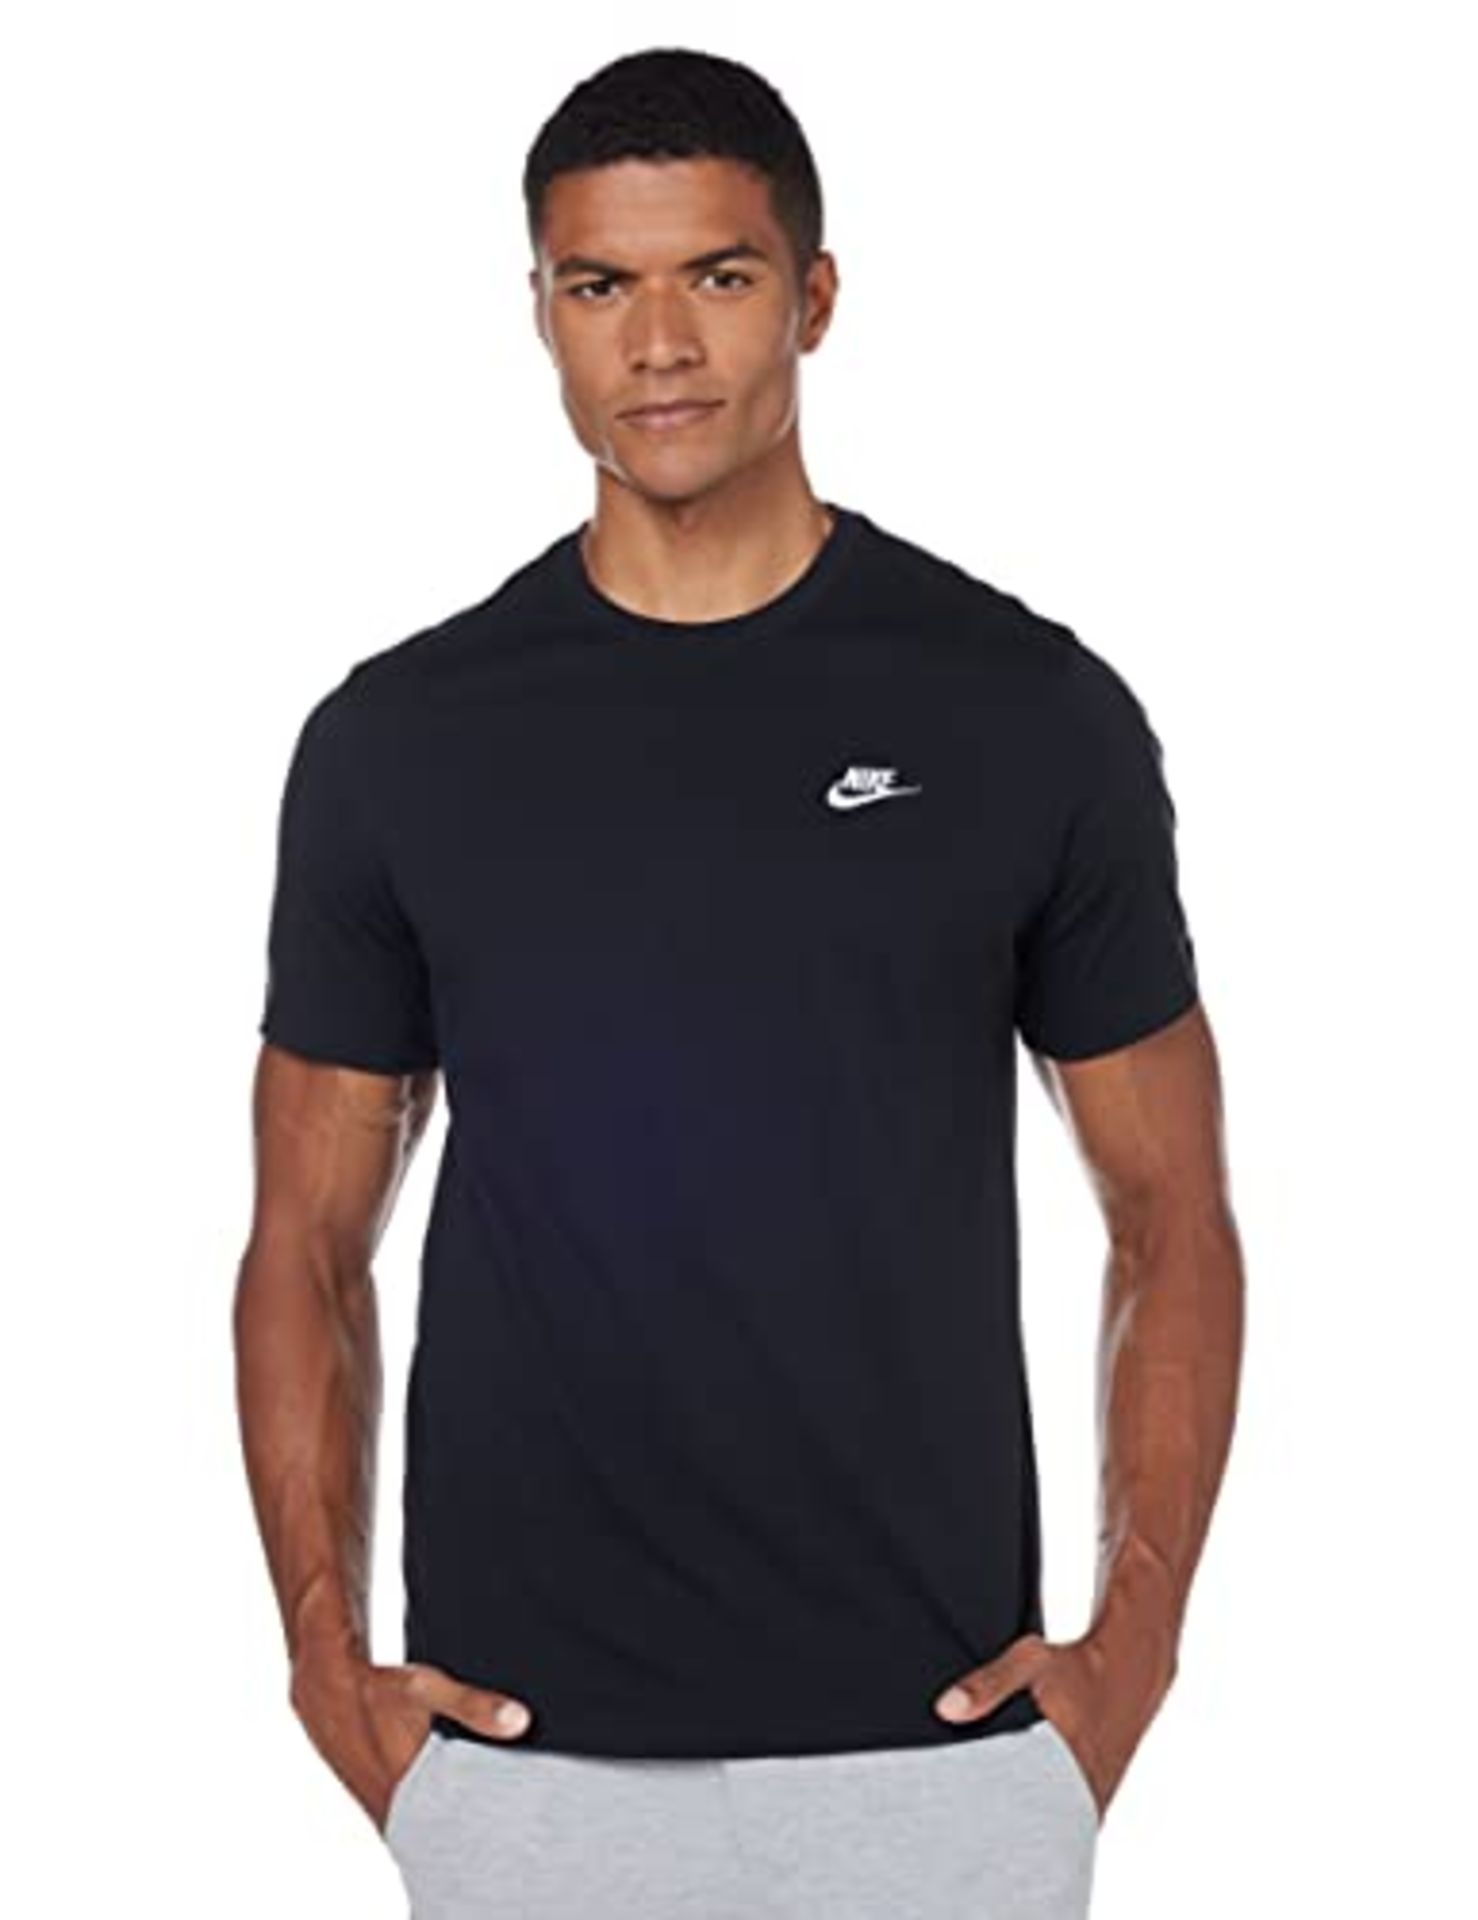 Nike M NSW Club Tee, Men's T-Shirt, Black White, XL